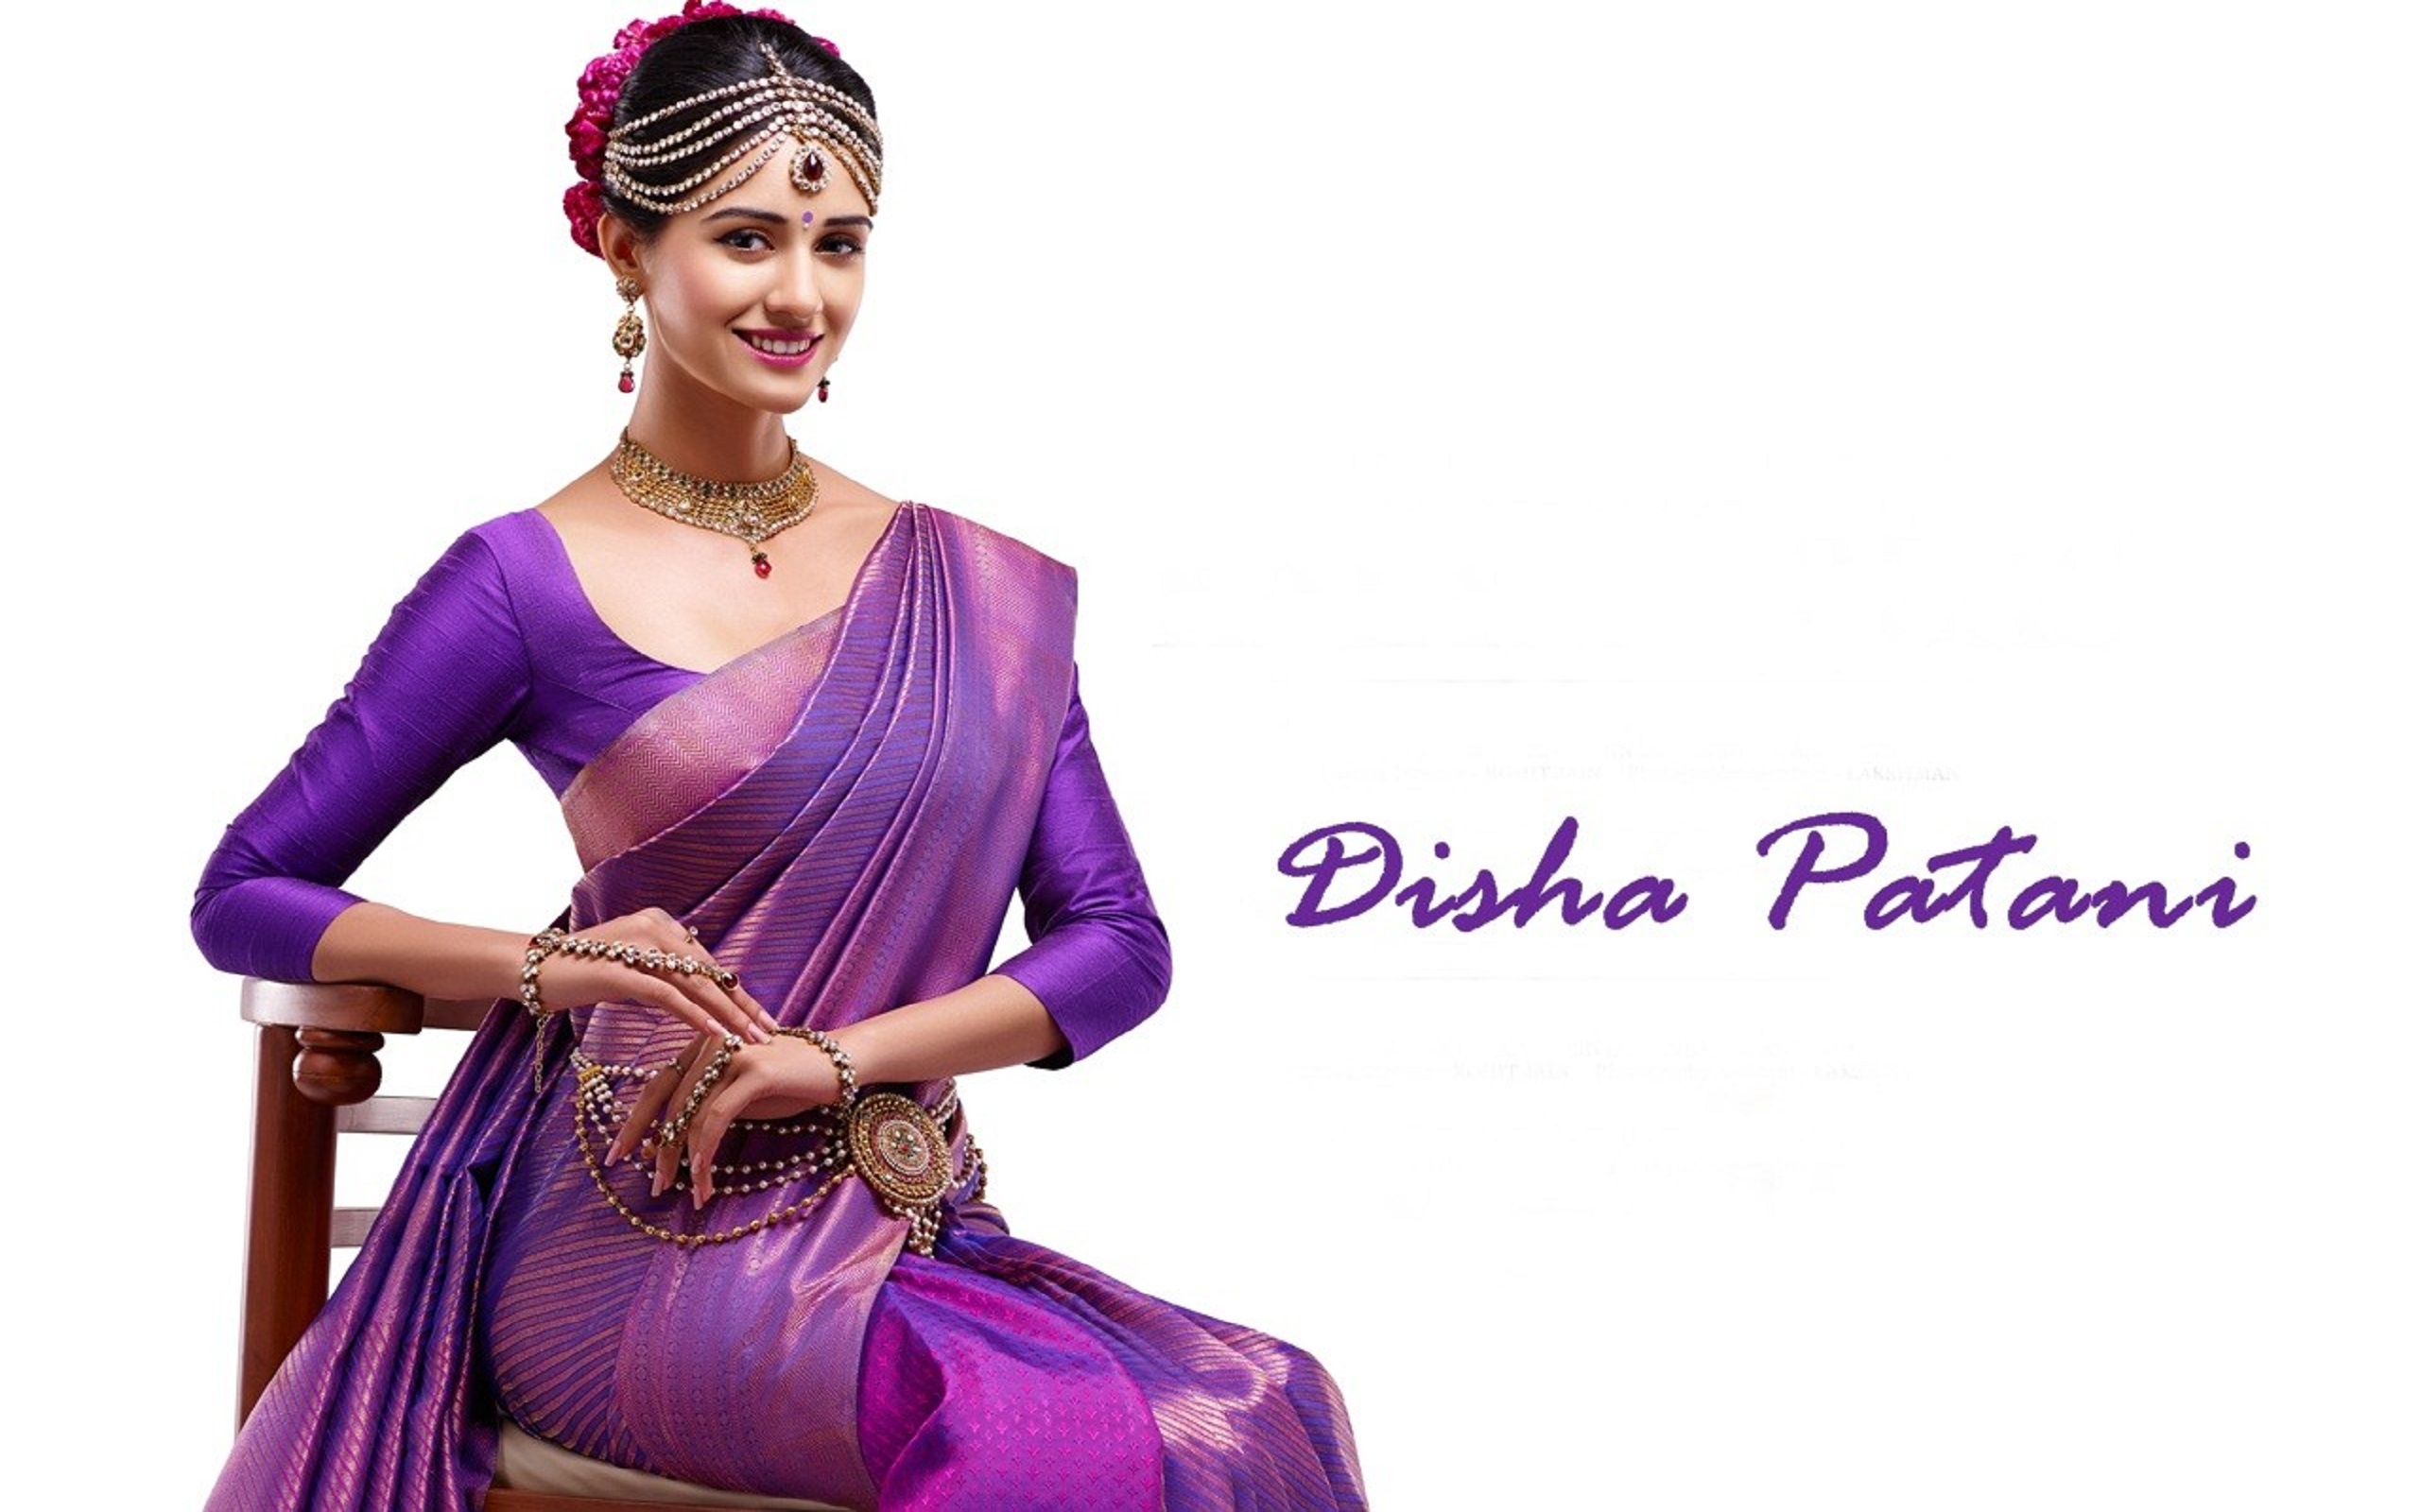 jagdish name wallpaper,lila,violett,sari,formelle kleidung,kleid